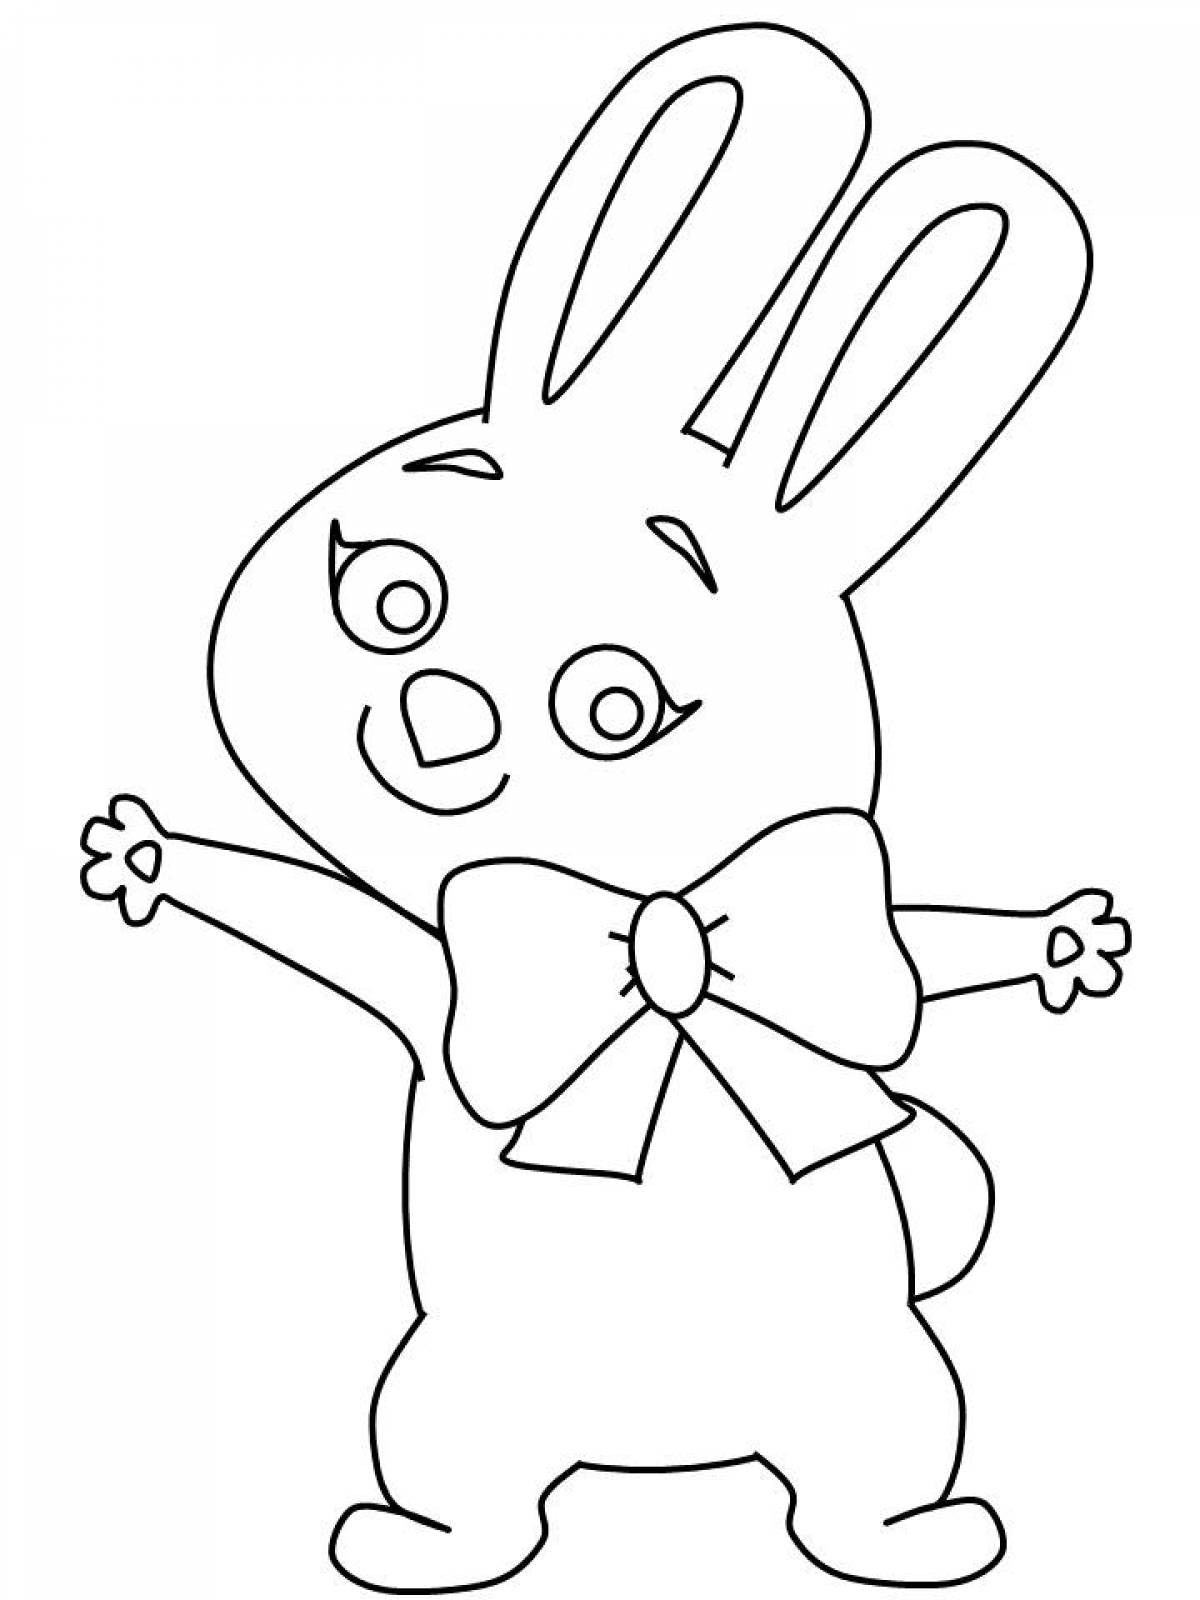 Fun bunny coloring game